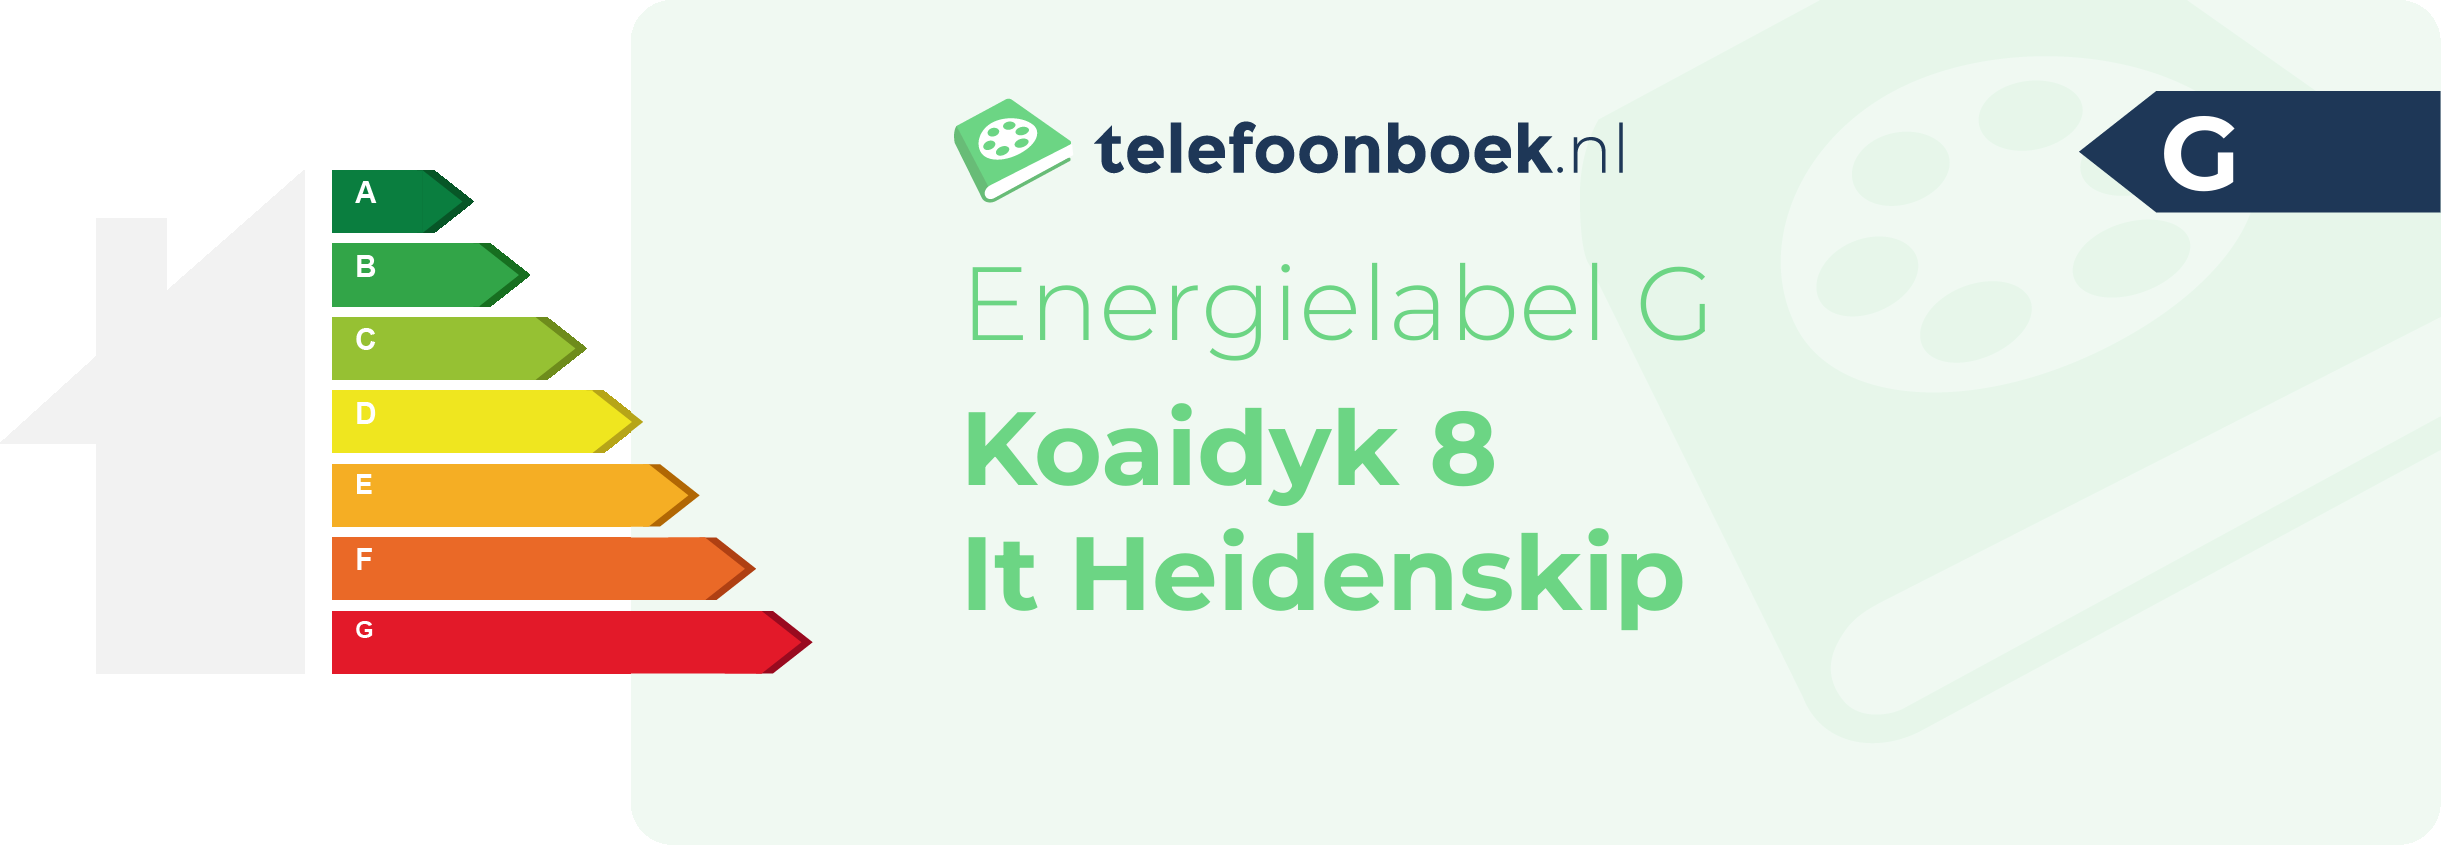 Energielabel Koaidyk 8 It Heidenskip